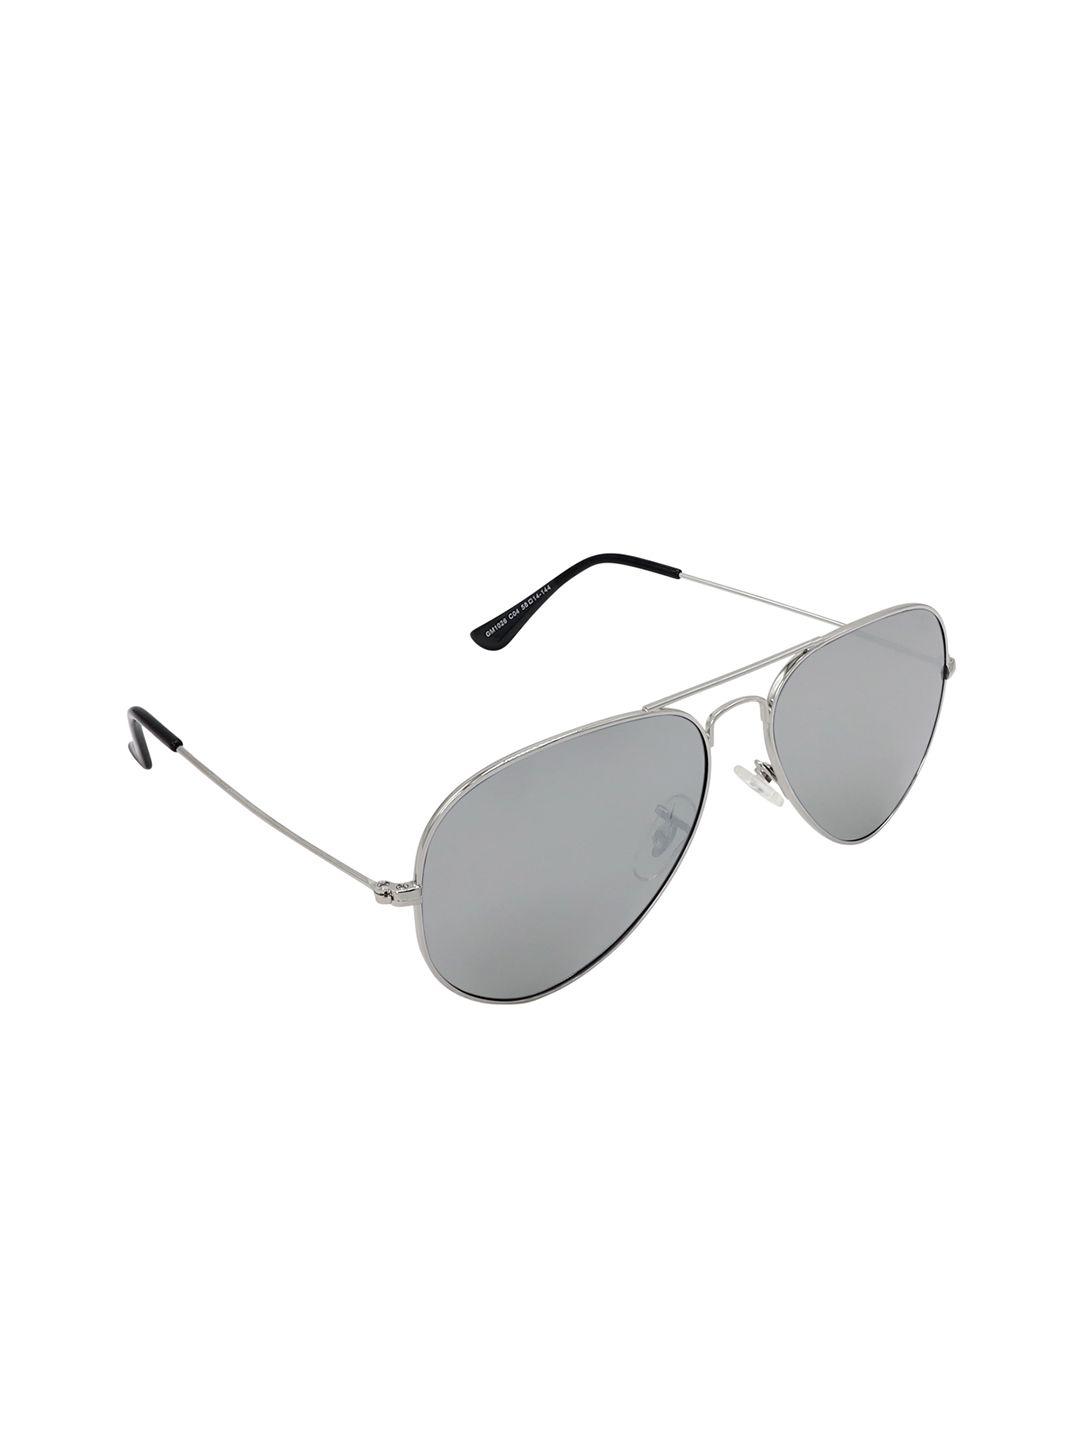 gio collection unisex aviator sunglasses gm1026c04